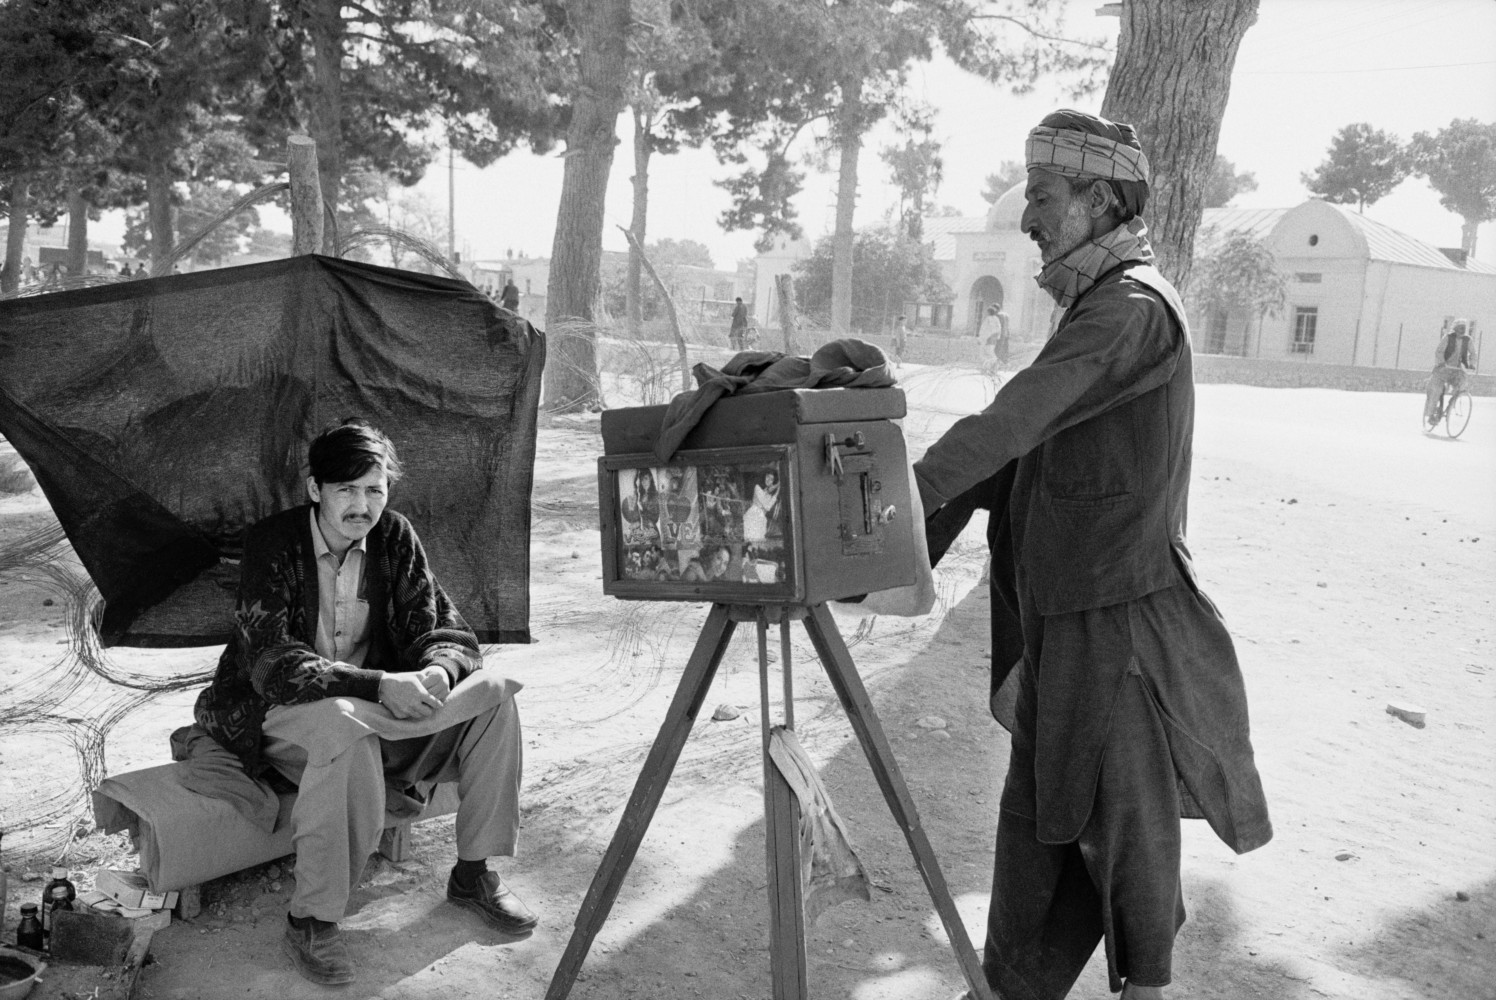 AFGHANISTAN. Photography studio in street. 1996